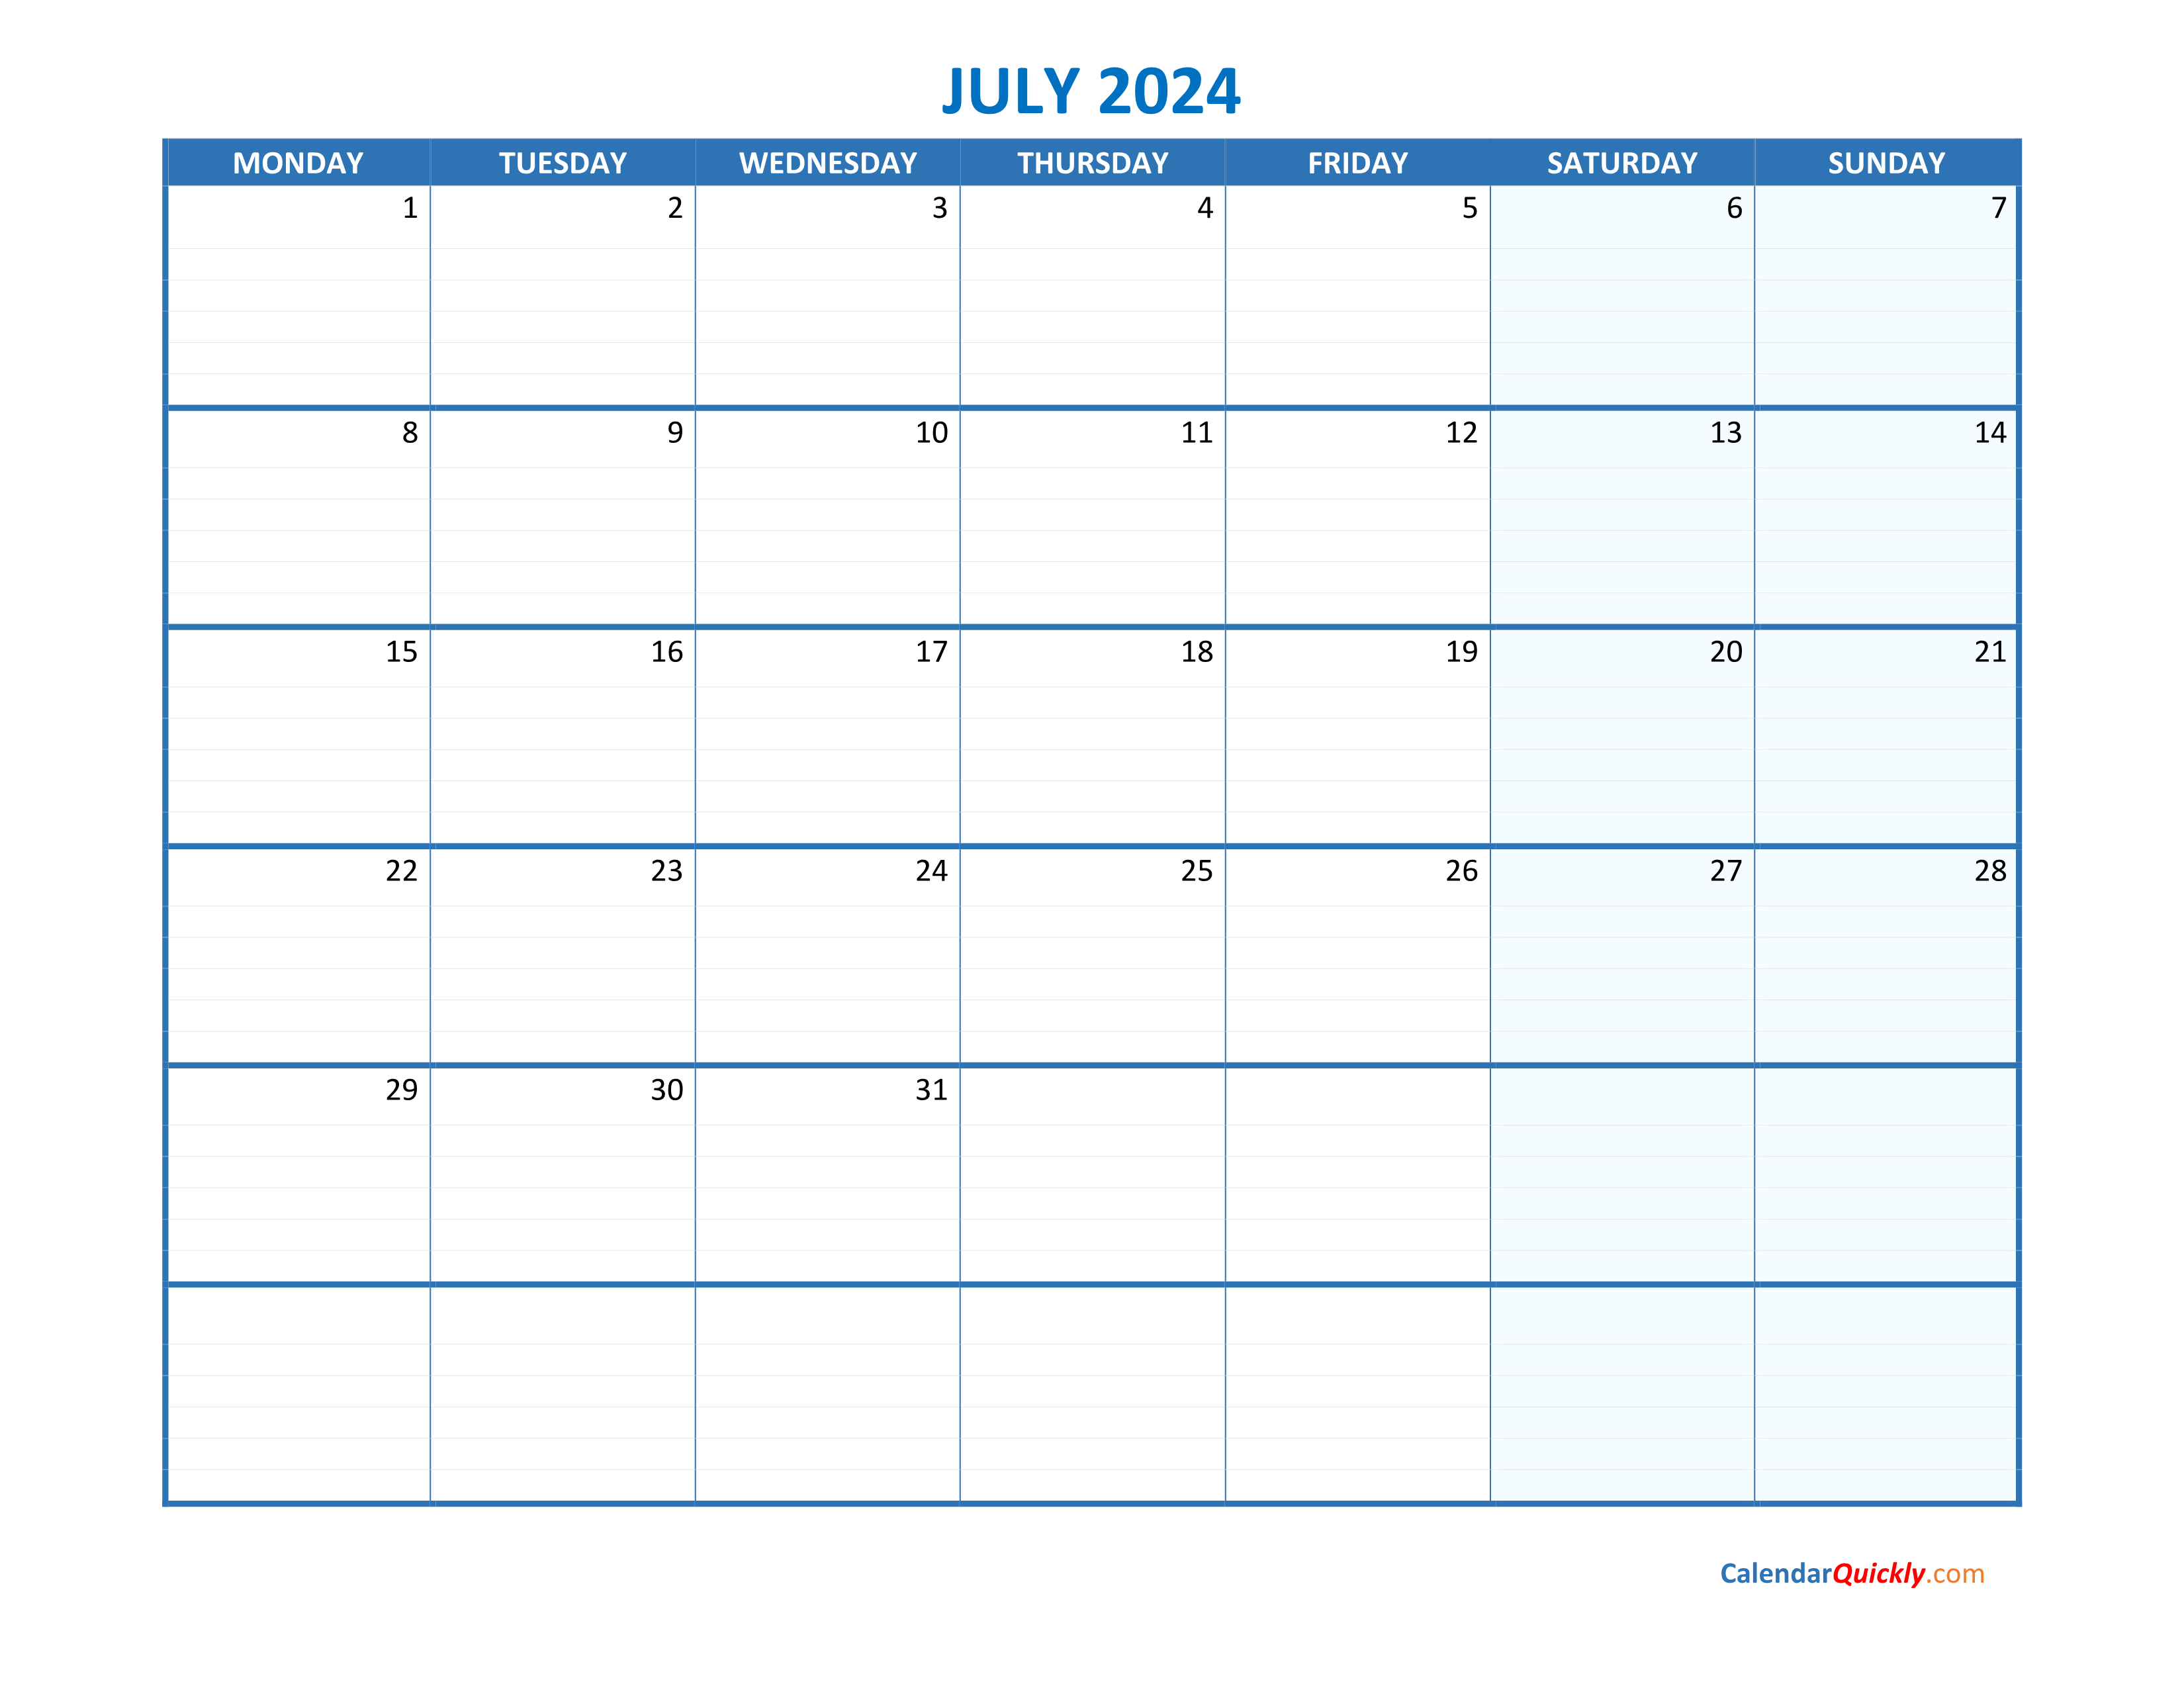 July Monday 2024 Blank Calendar Calendar Quickly - Free Printable 2024 Monthly Calendar Monday To Sunday